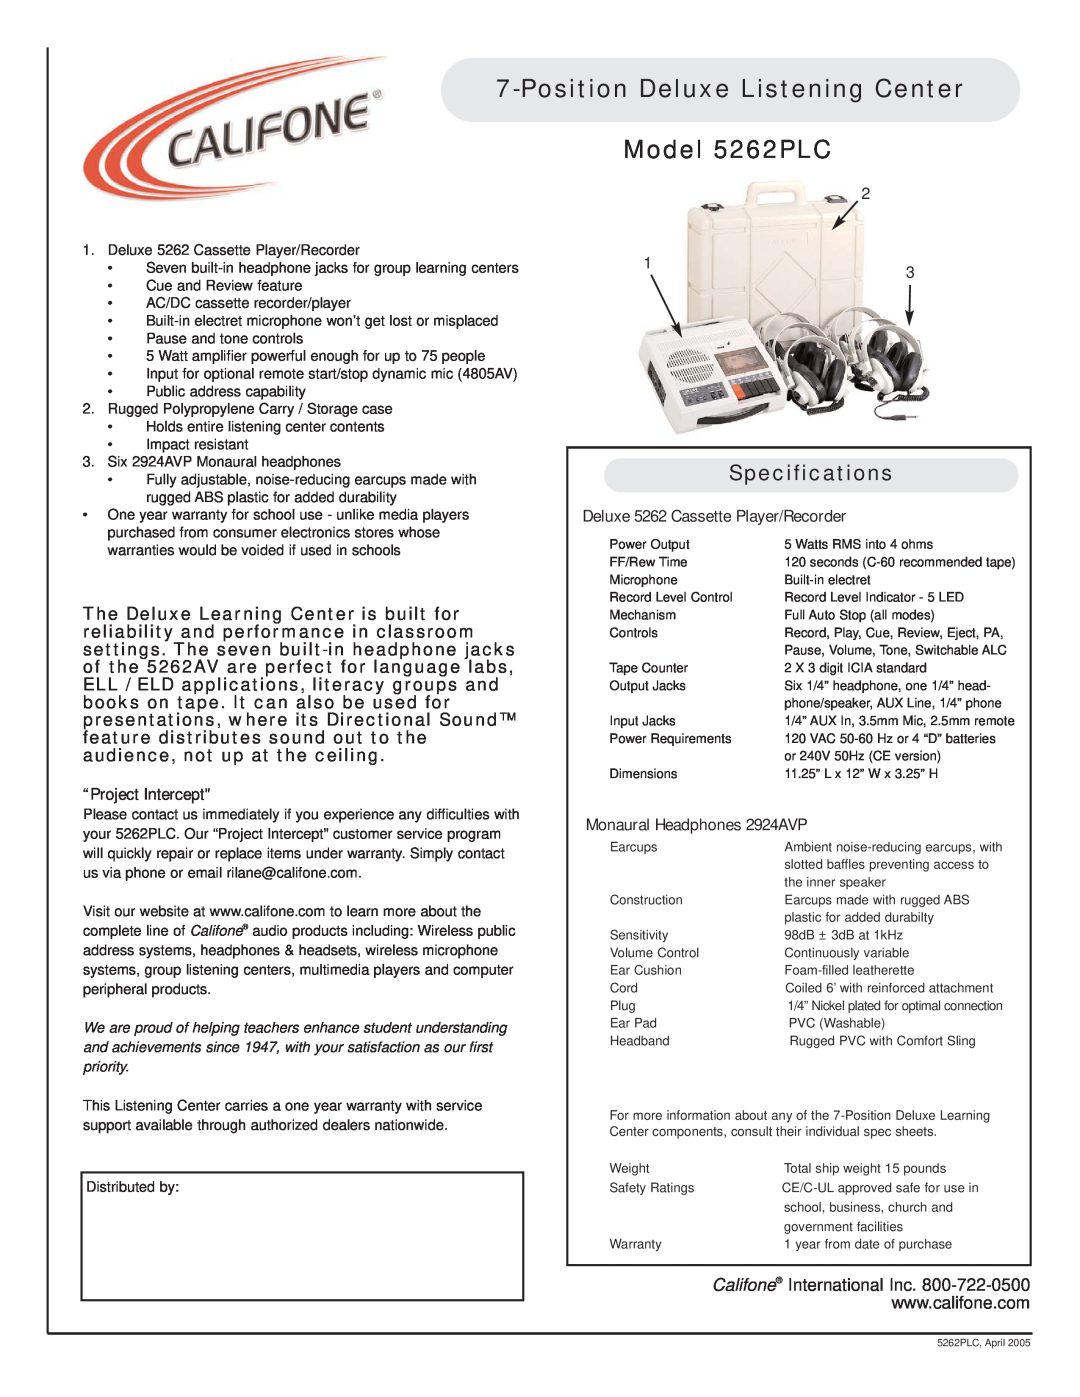 Califone specifications PositionDeluxe Listening Center Model 5262PLC, Specifications, Califone International Inc 